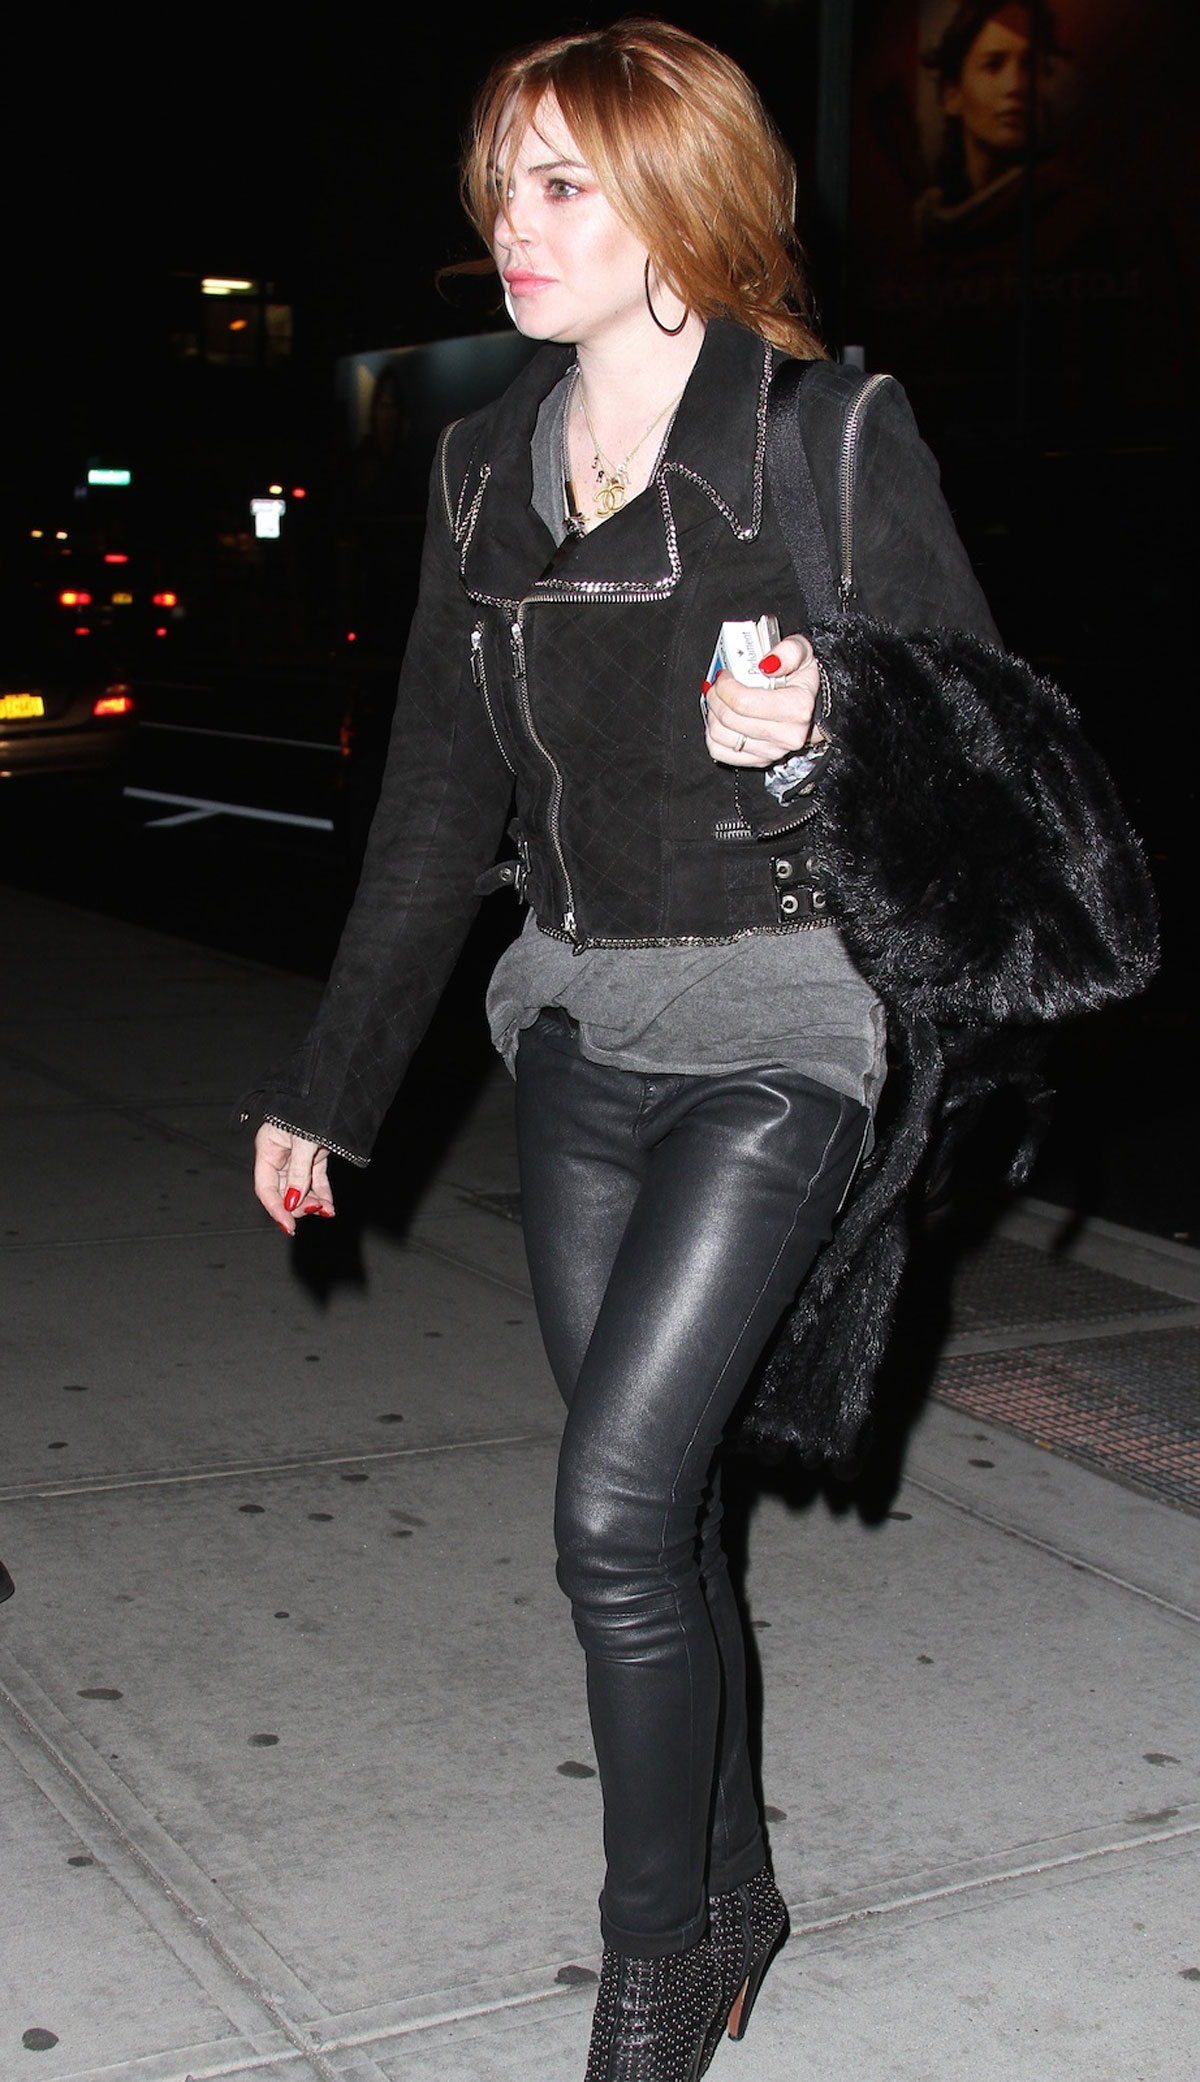 Lindsay Lohan at Bobby Flay’s New York restaurant Gato